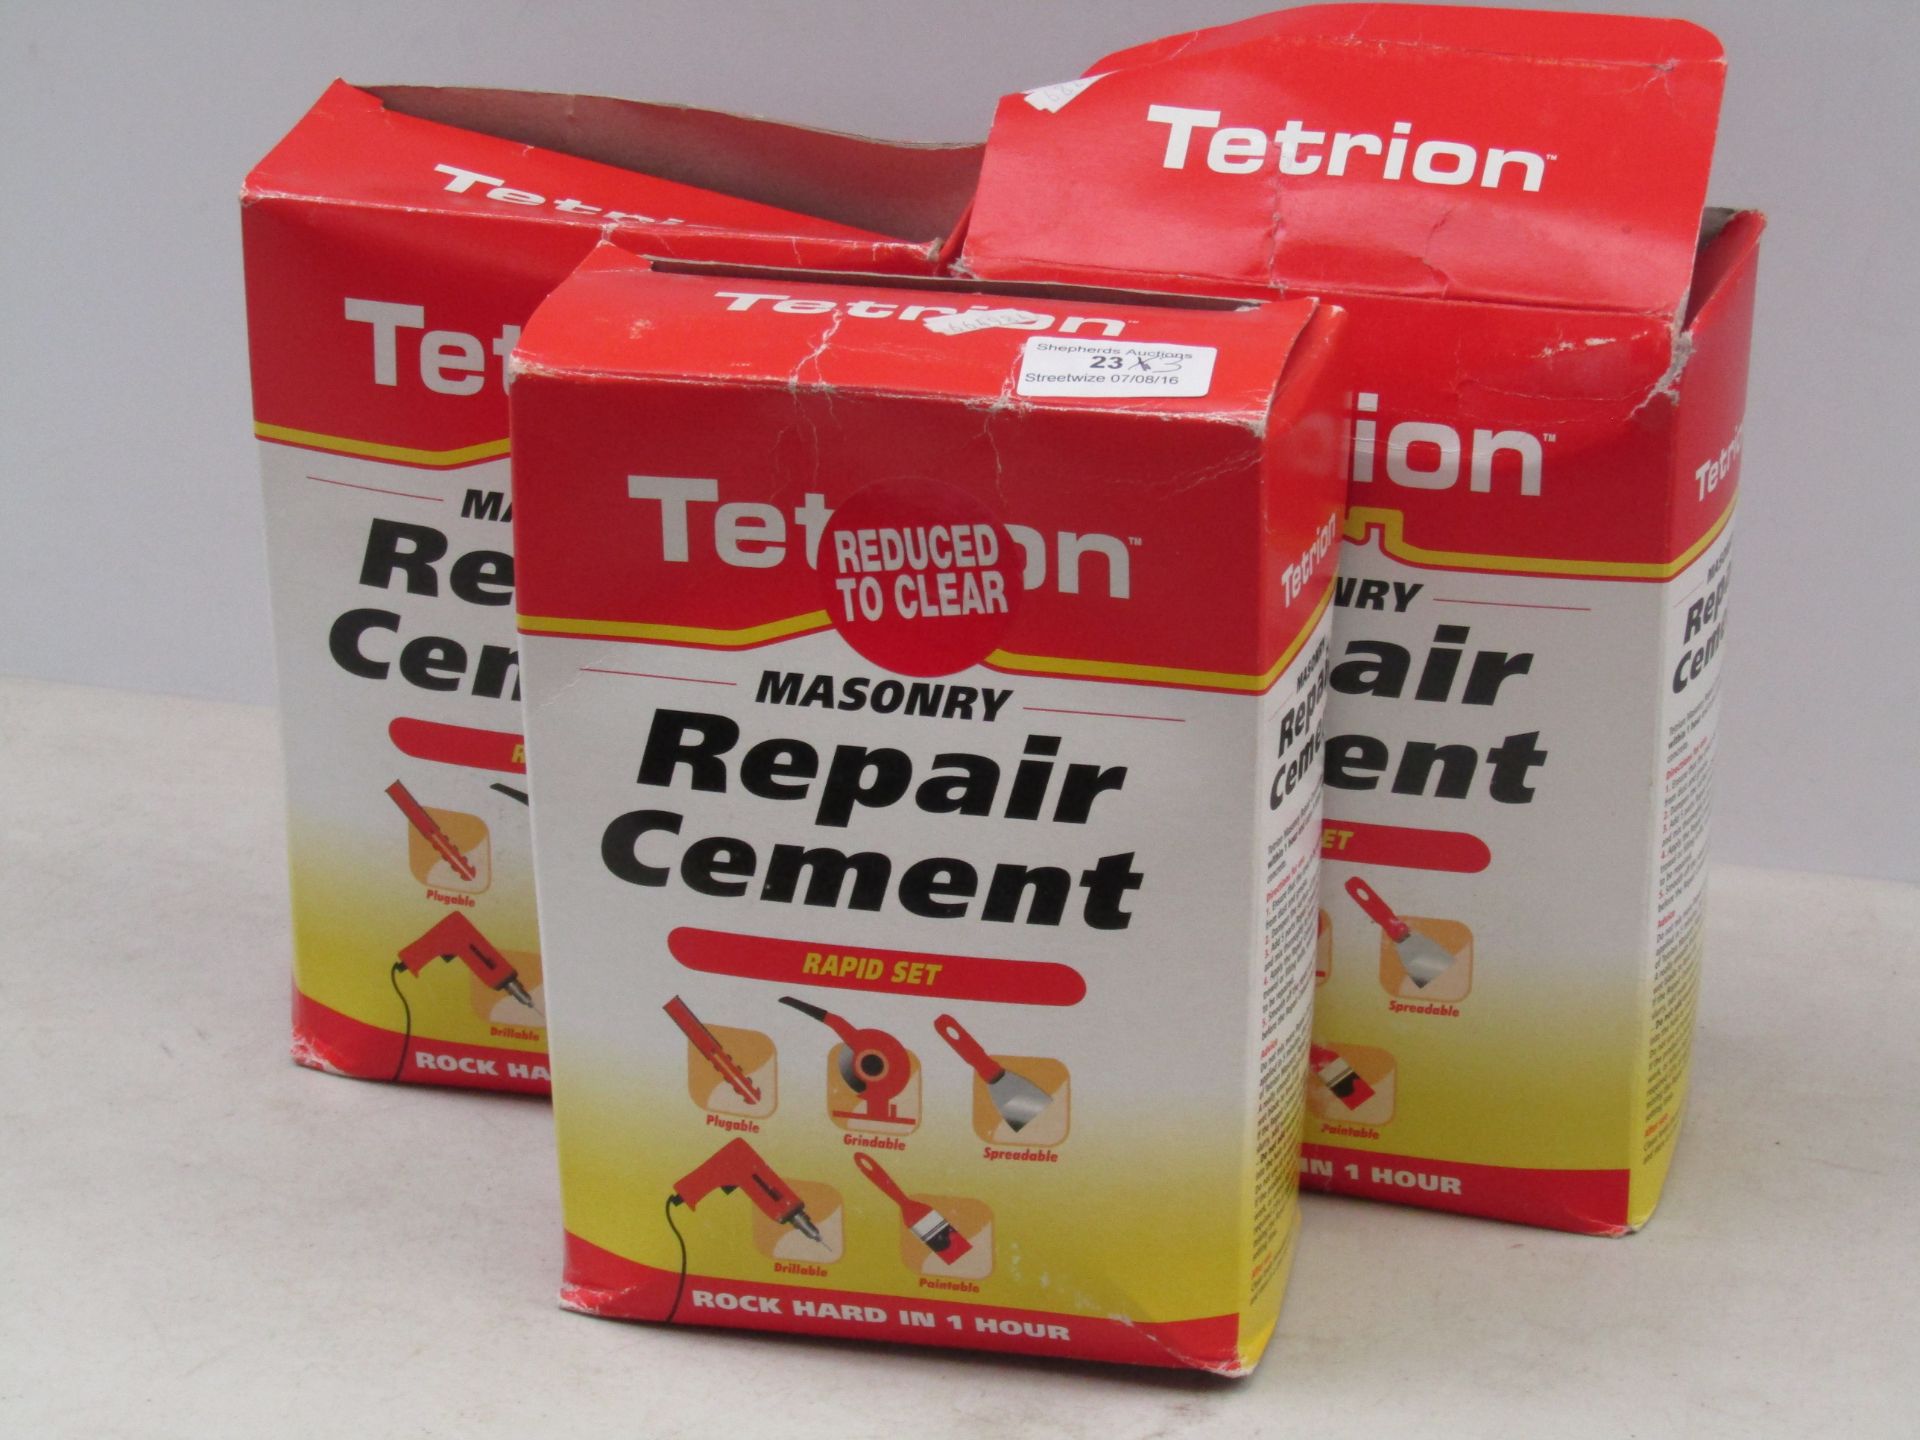 3x 2kg Boxes of Tetrion Masonry Repair Cement Rapid Set.